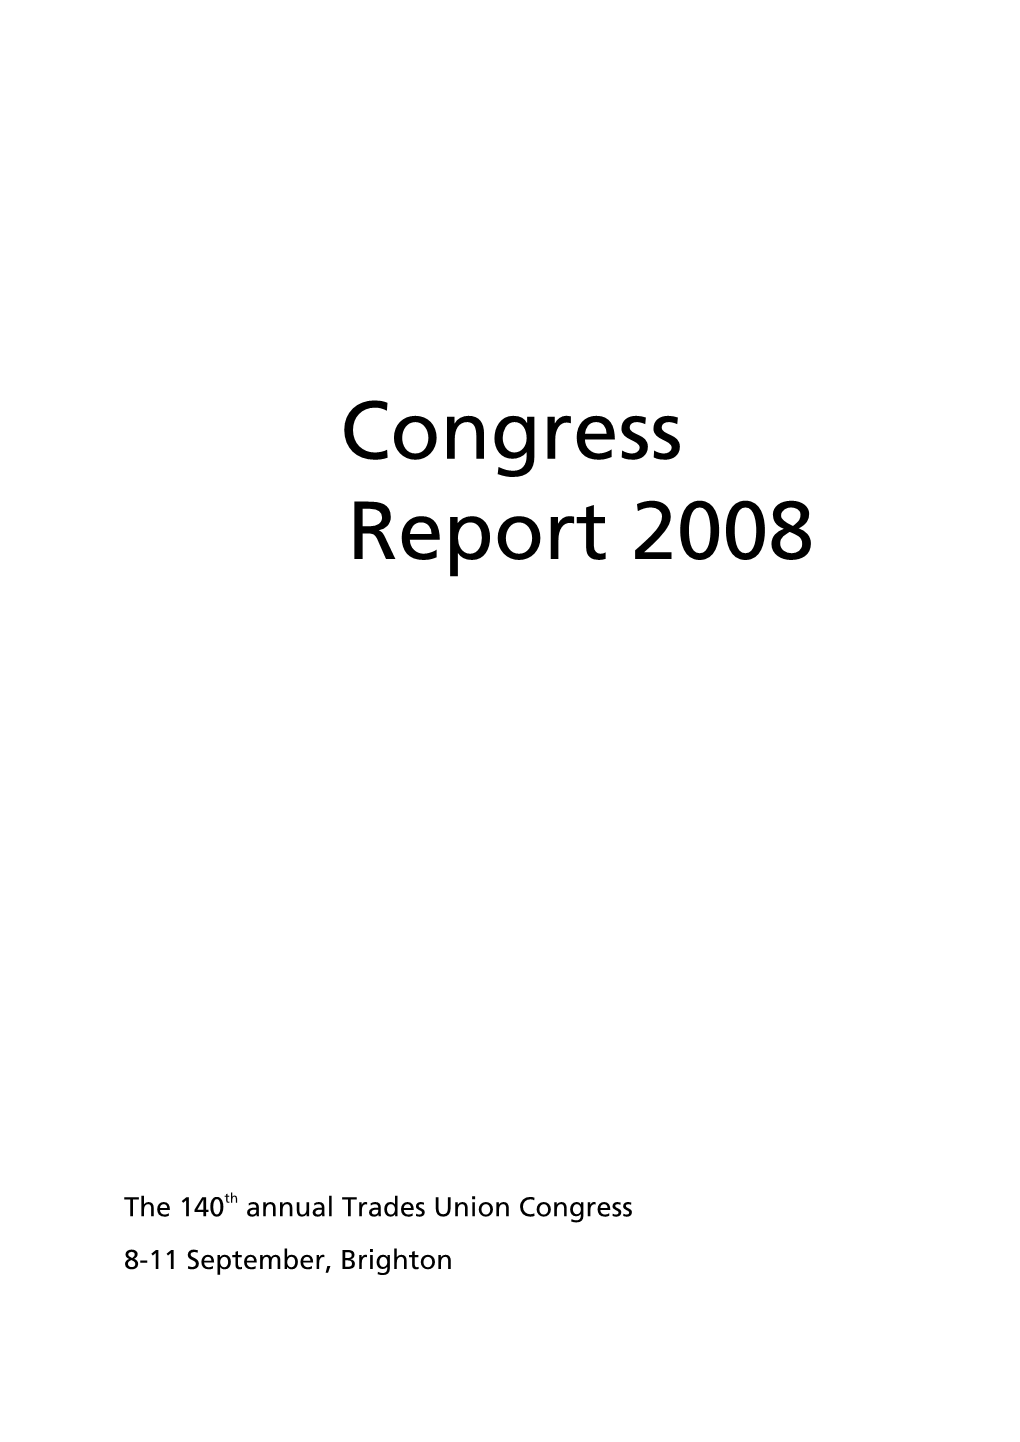 Congress Report 2008